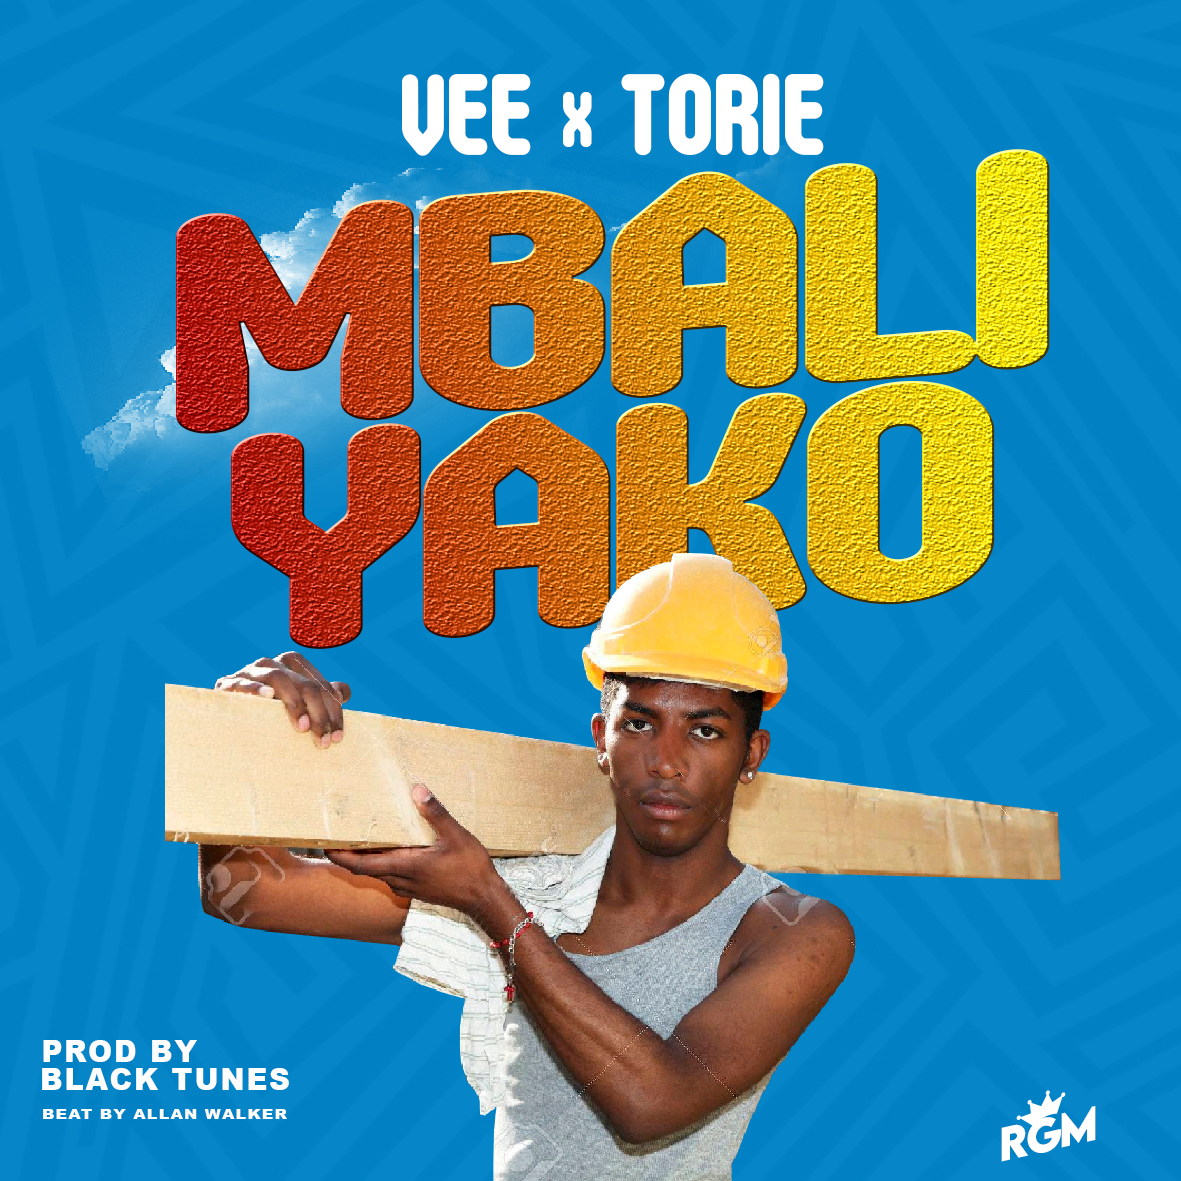 Vee x Torie – Mbali yako (Prod By Blacktunes)